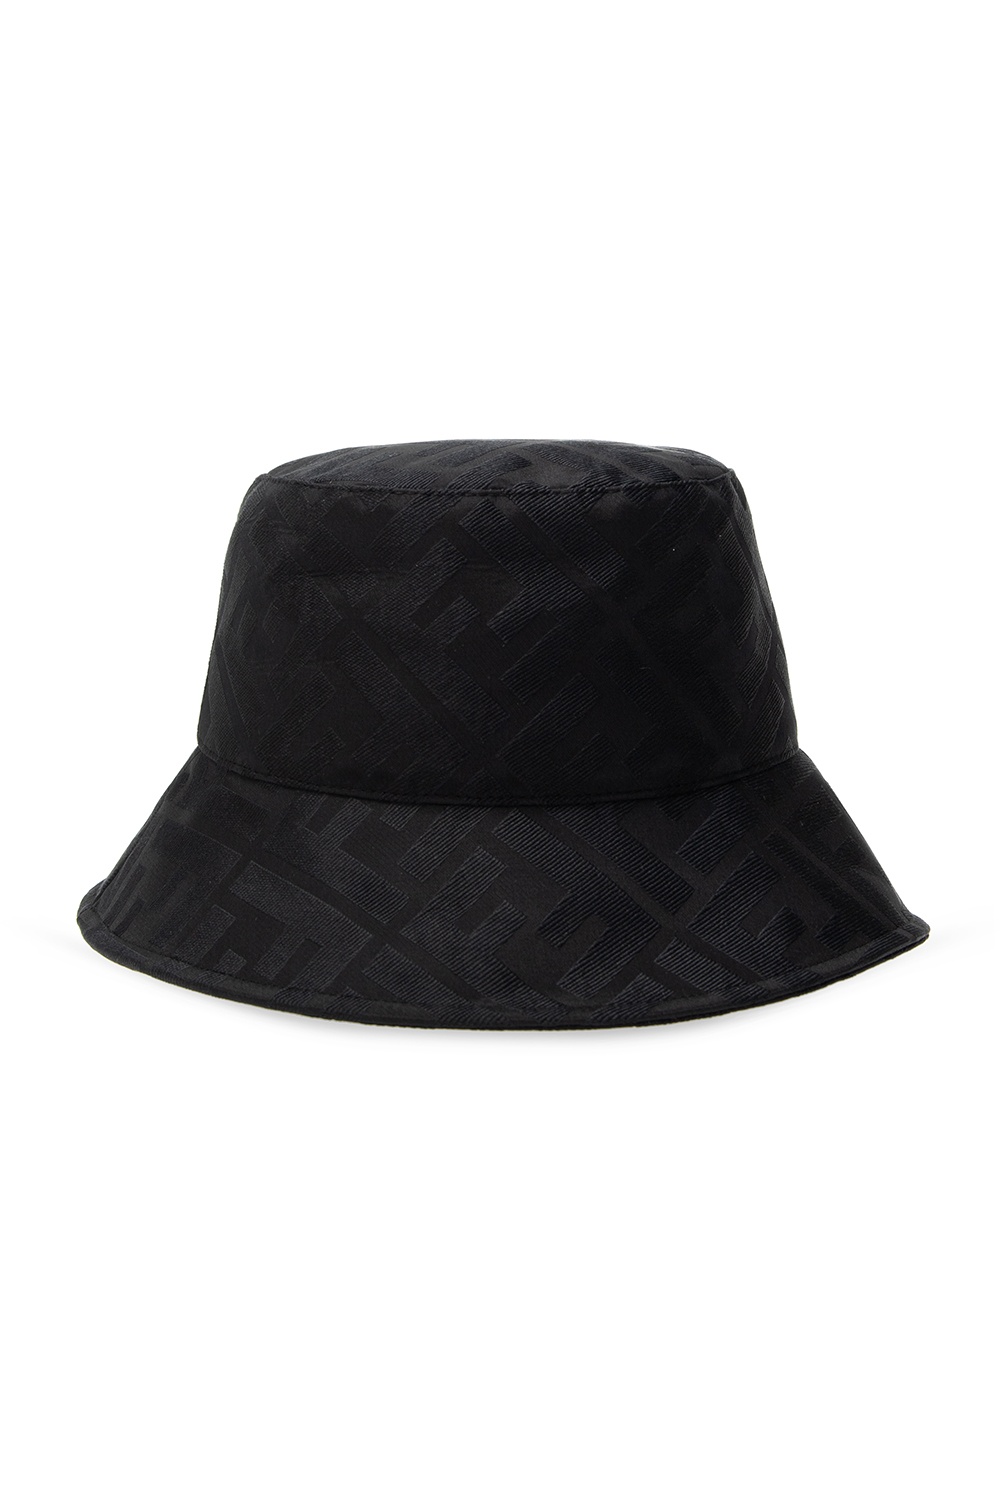 fendi black hat